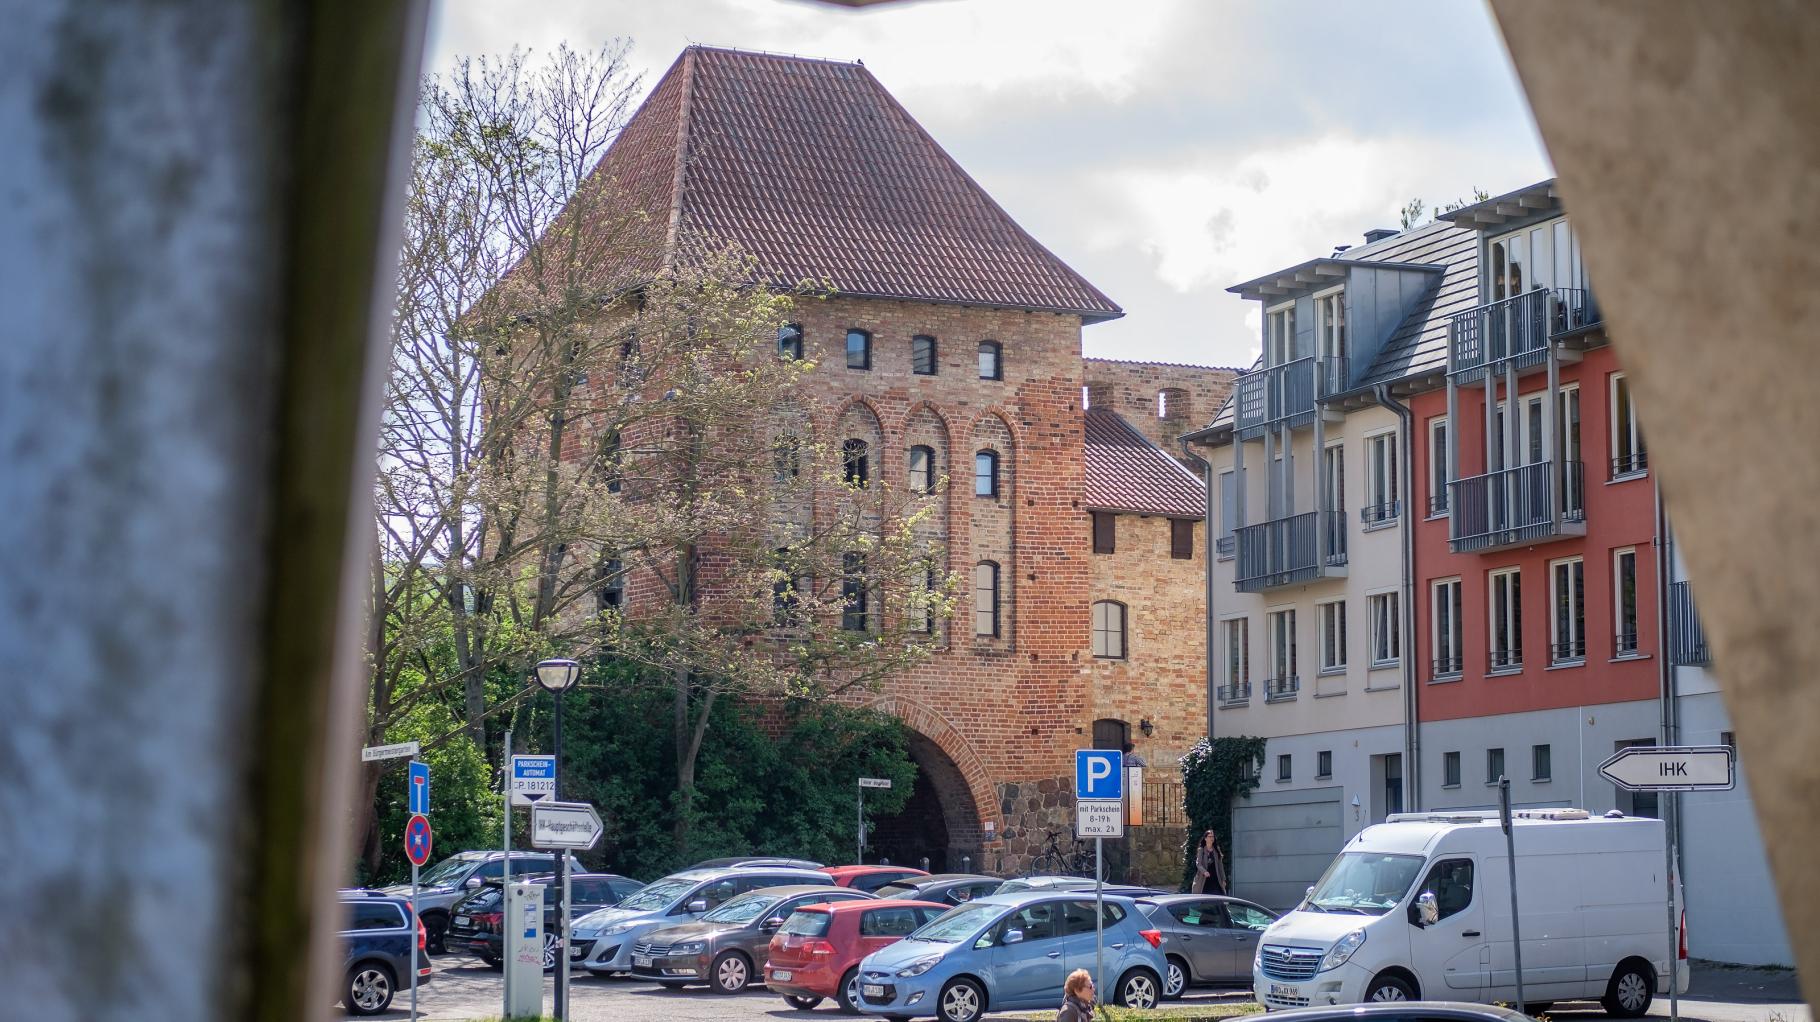 Wie sich das Umfeld des Kuhtors in Rostocks Altstadt verändern soll